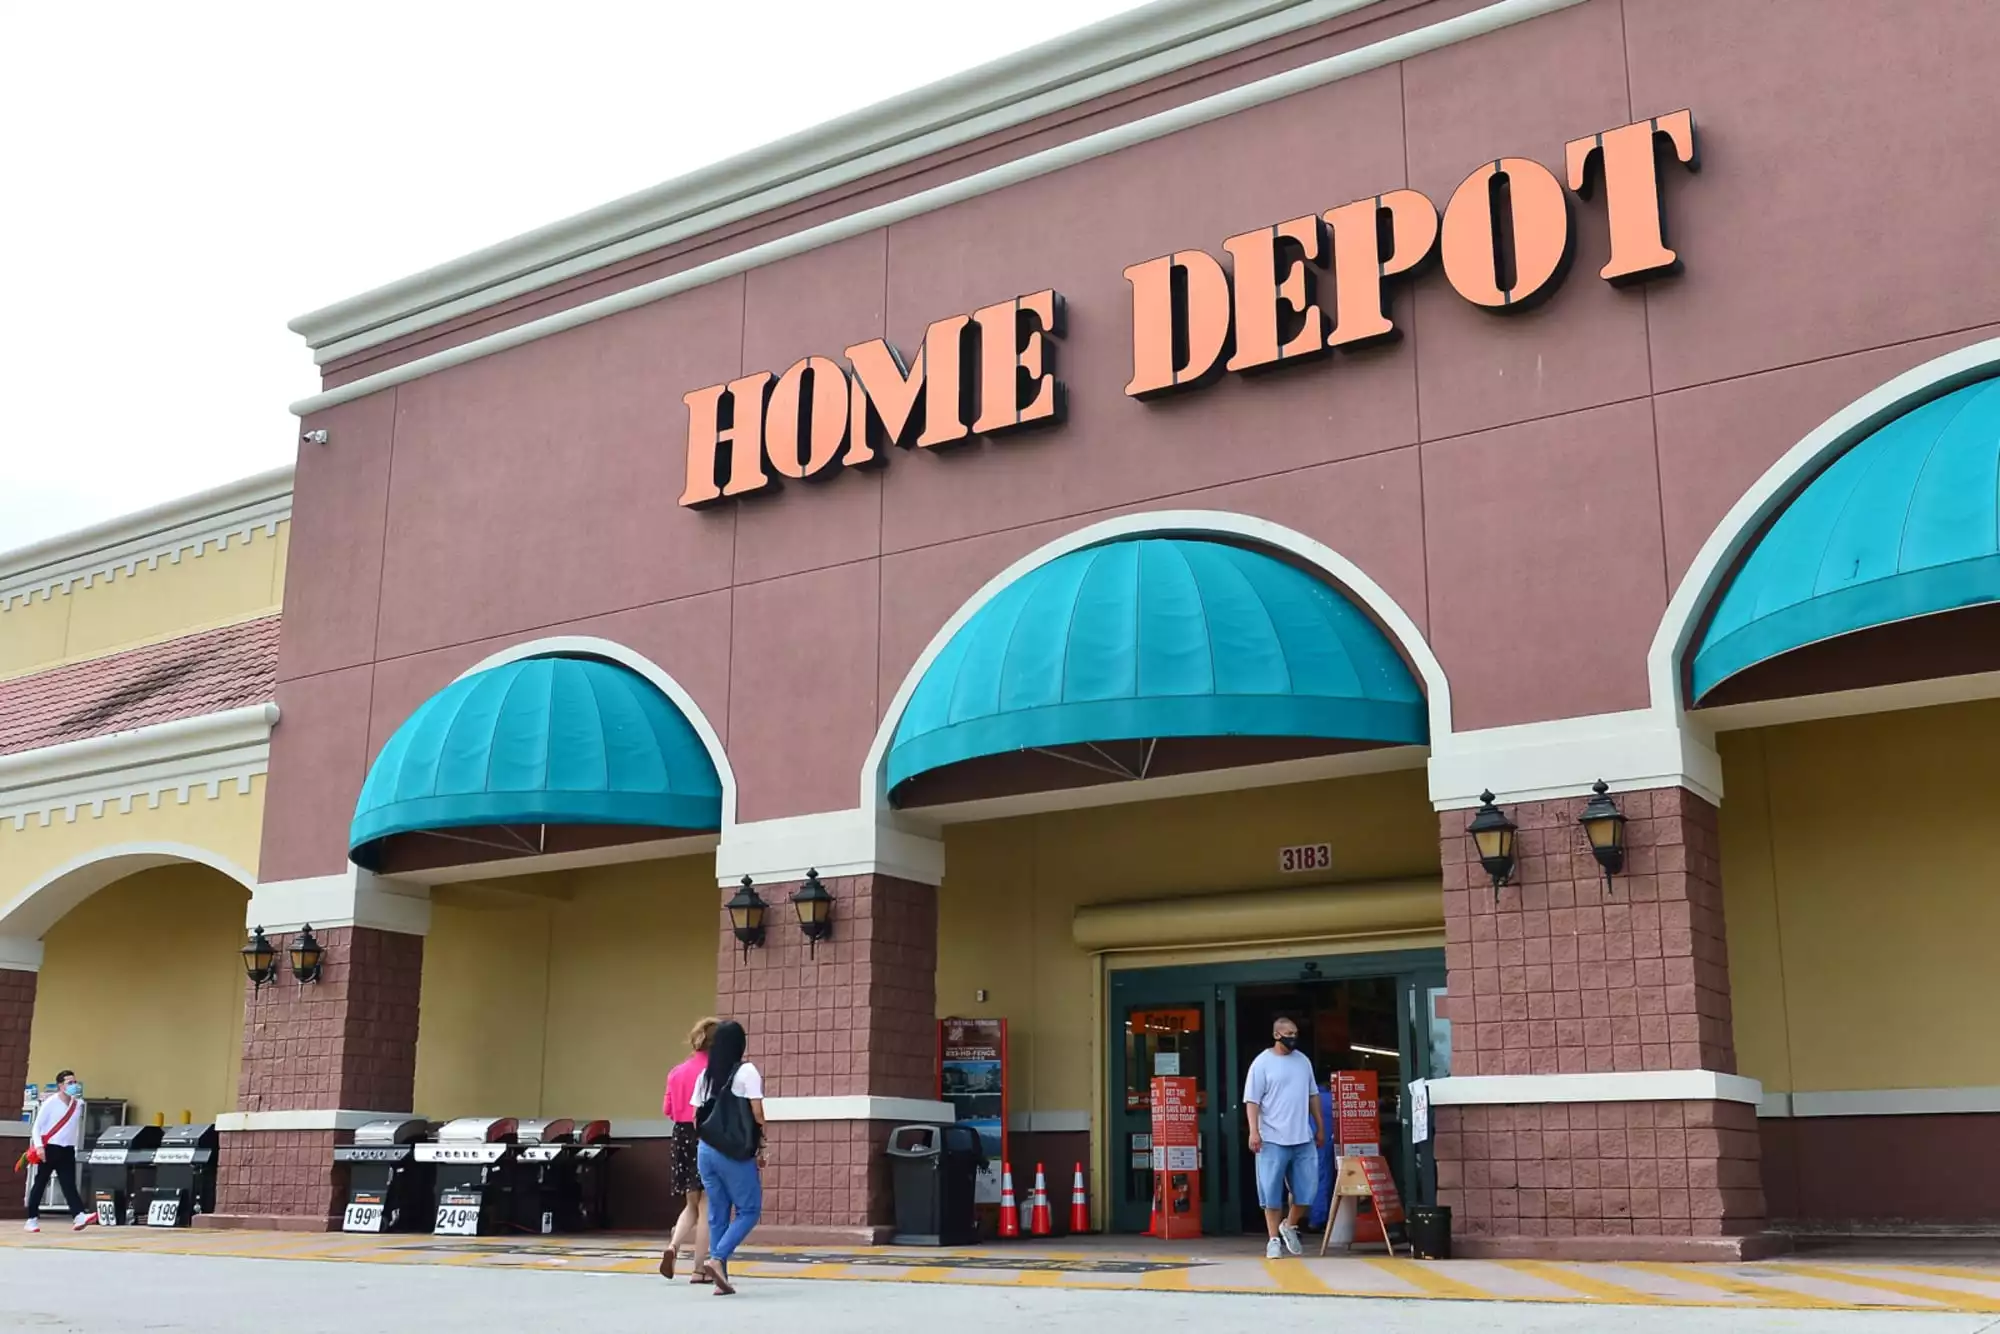 Home Depot offre-t-il des rabais AAA?